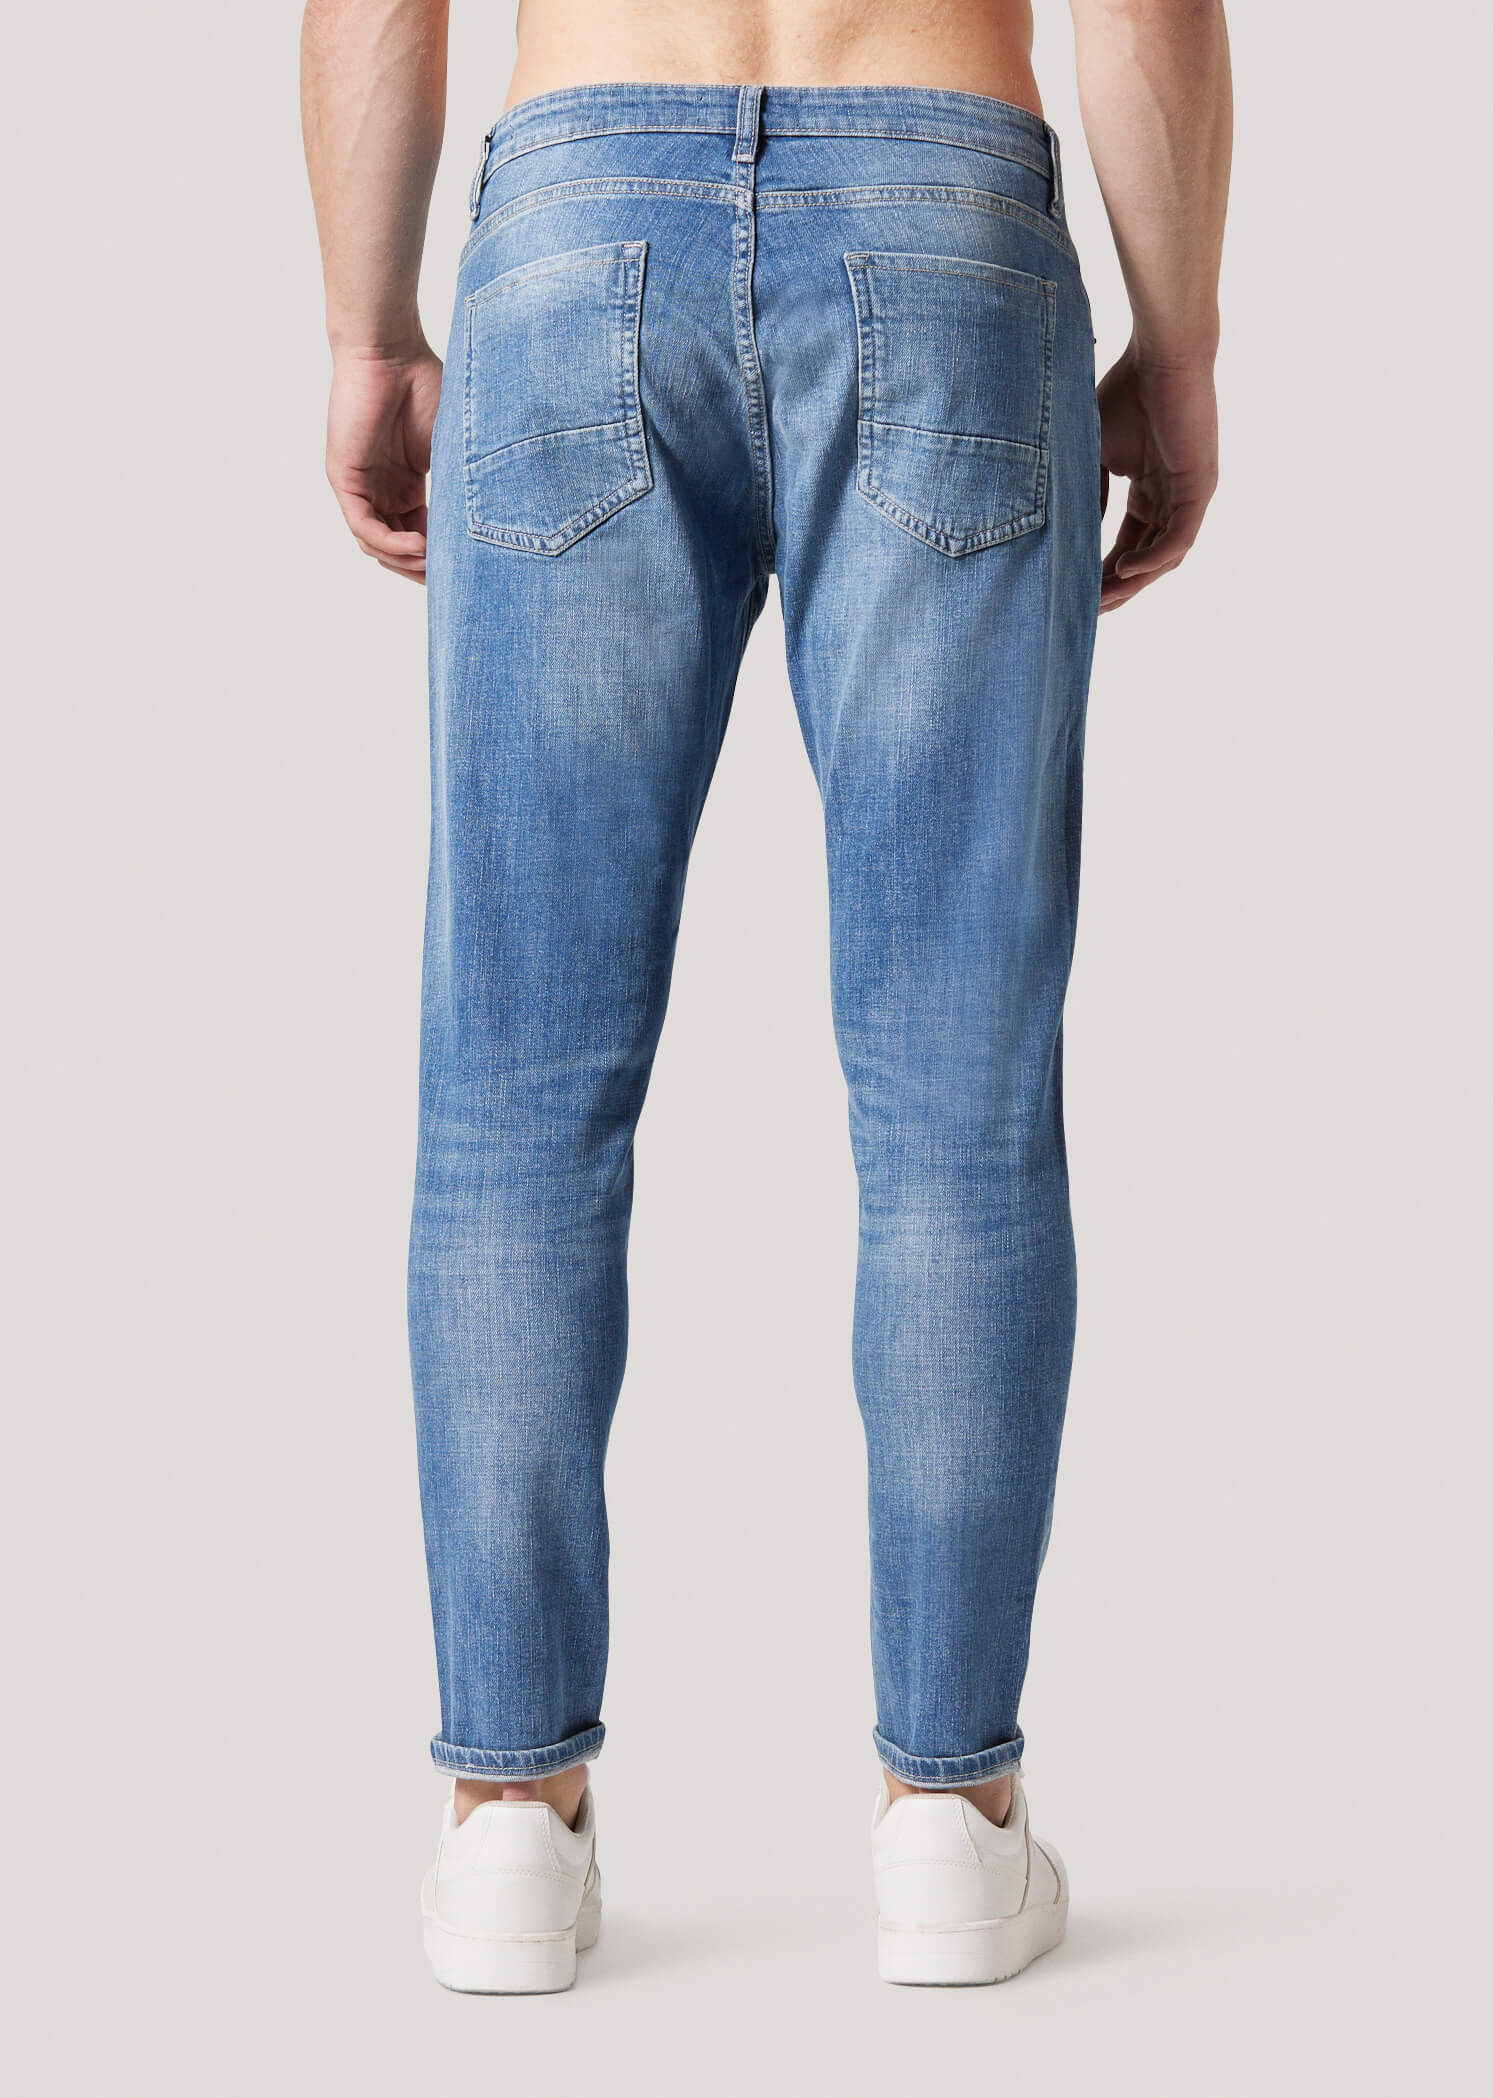 Spenlow 918 Light Blue Slim Fit Denim Jeans